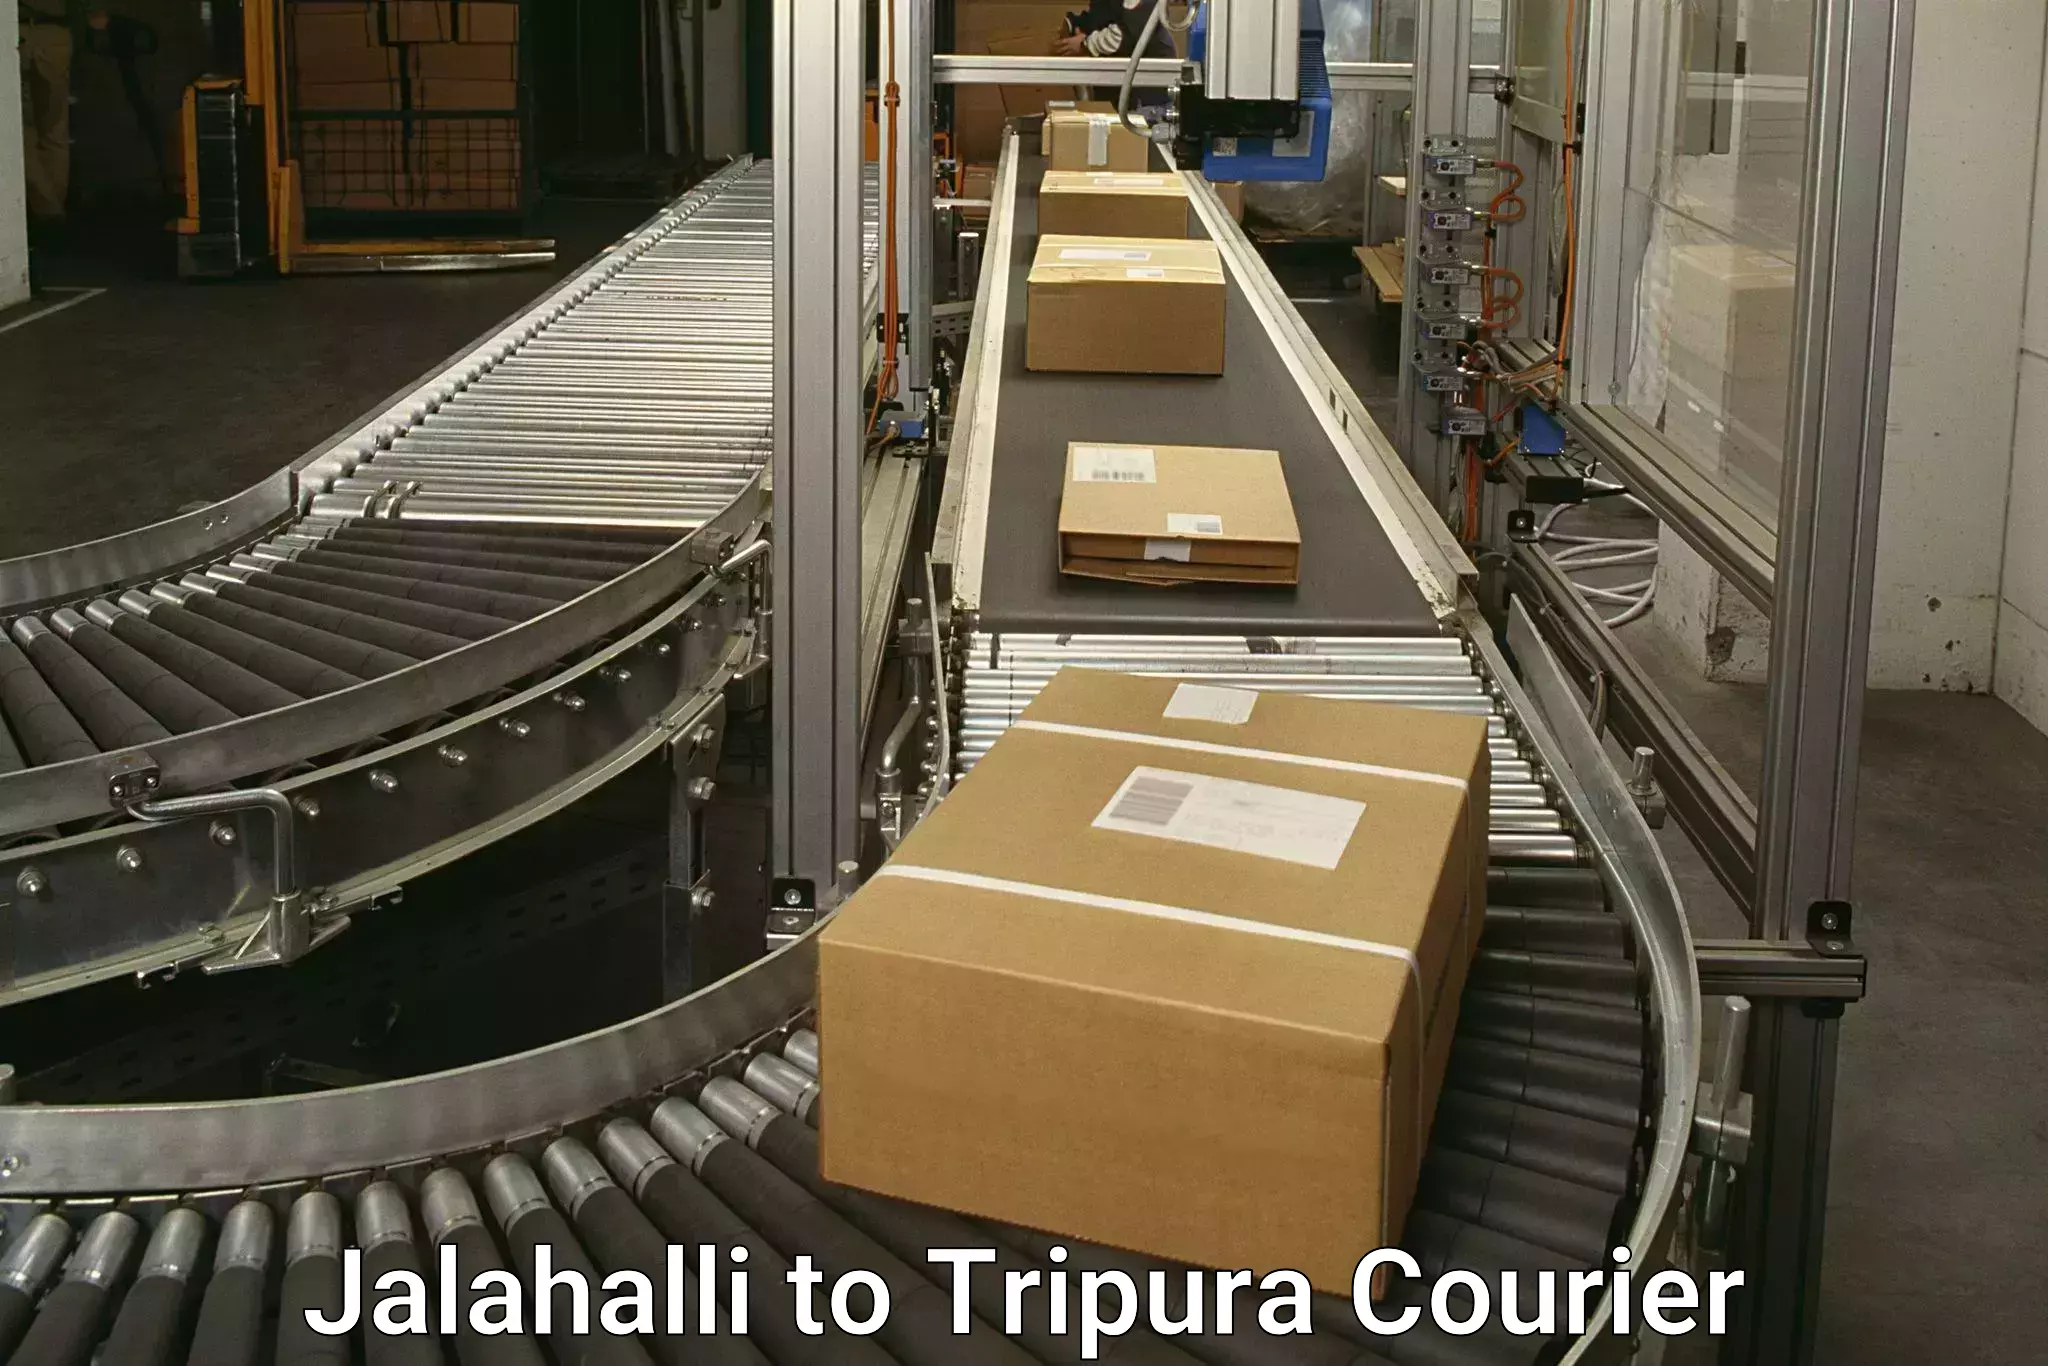 Cash on delivery service Jalahalli to Udaipur Tripura